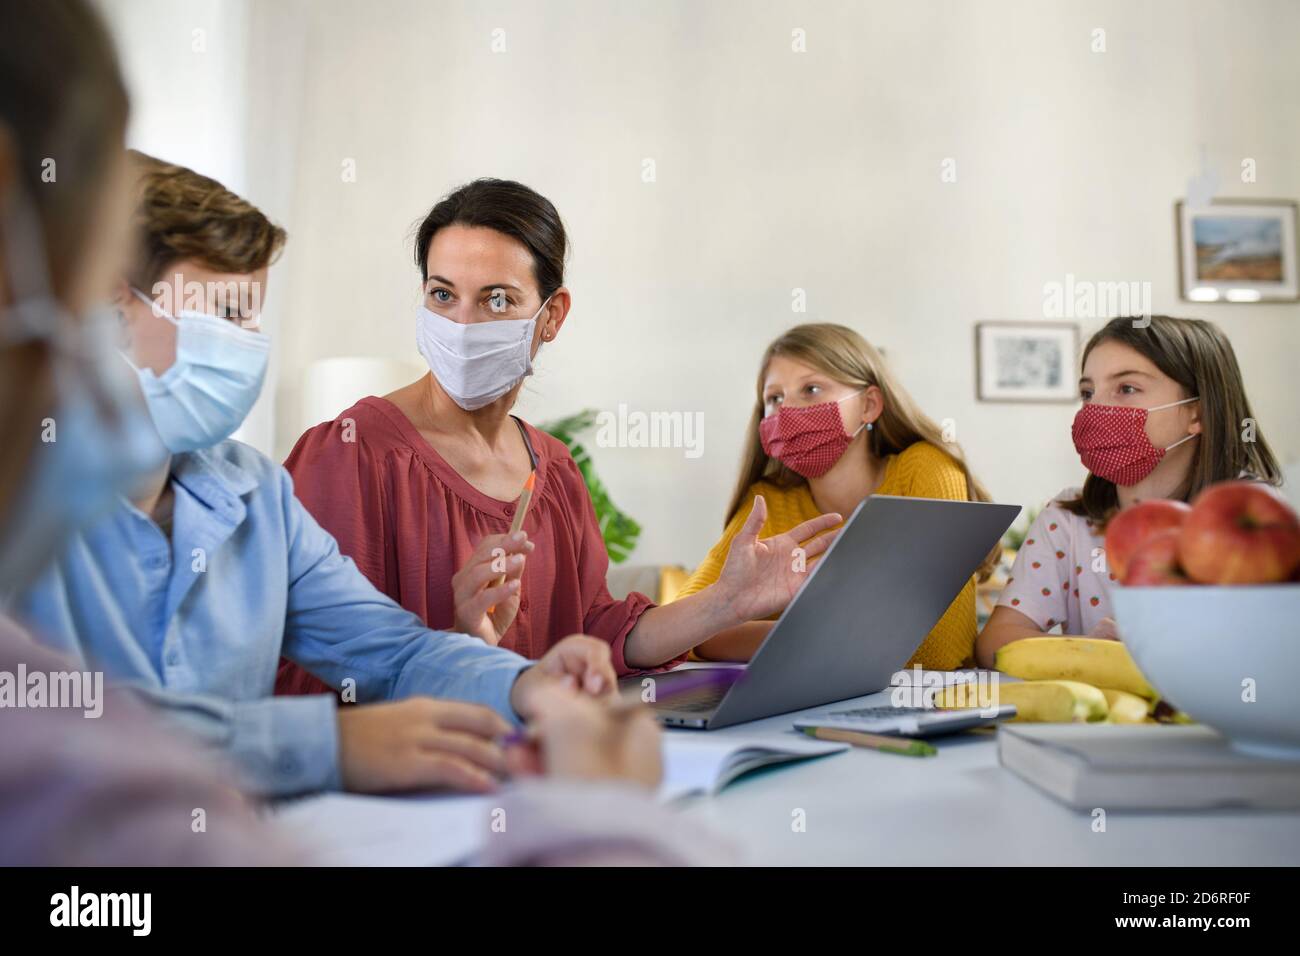 Group of homeschooling children with teacher studying indoors, coronavirus concept. Stock Photo